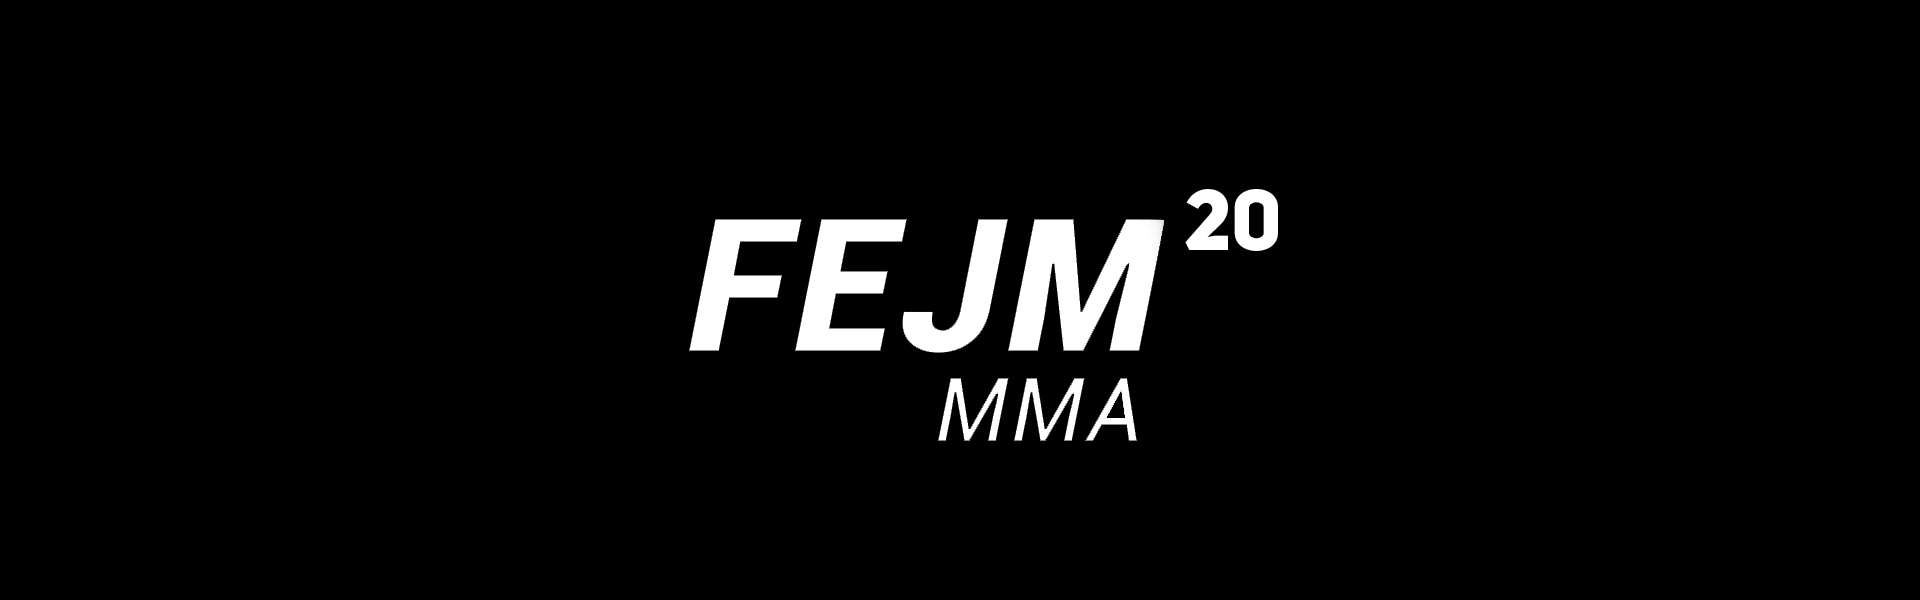 Stream FAME MMA 20 za darmo